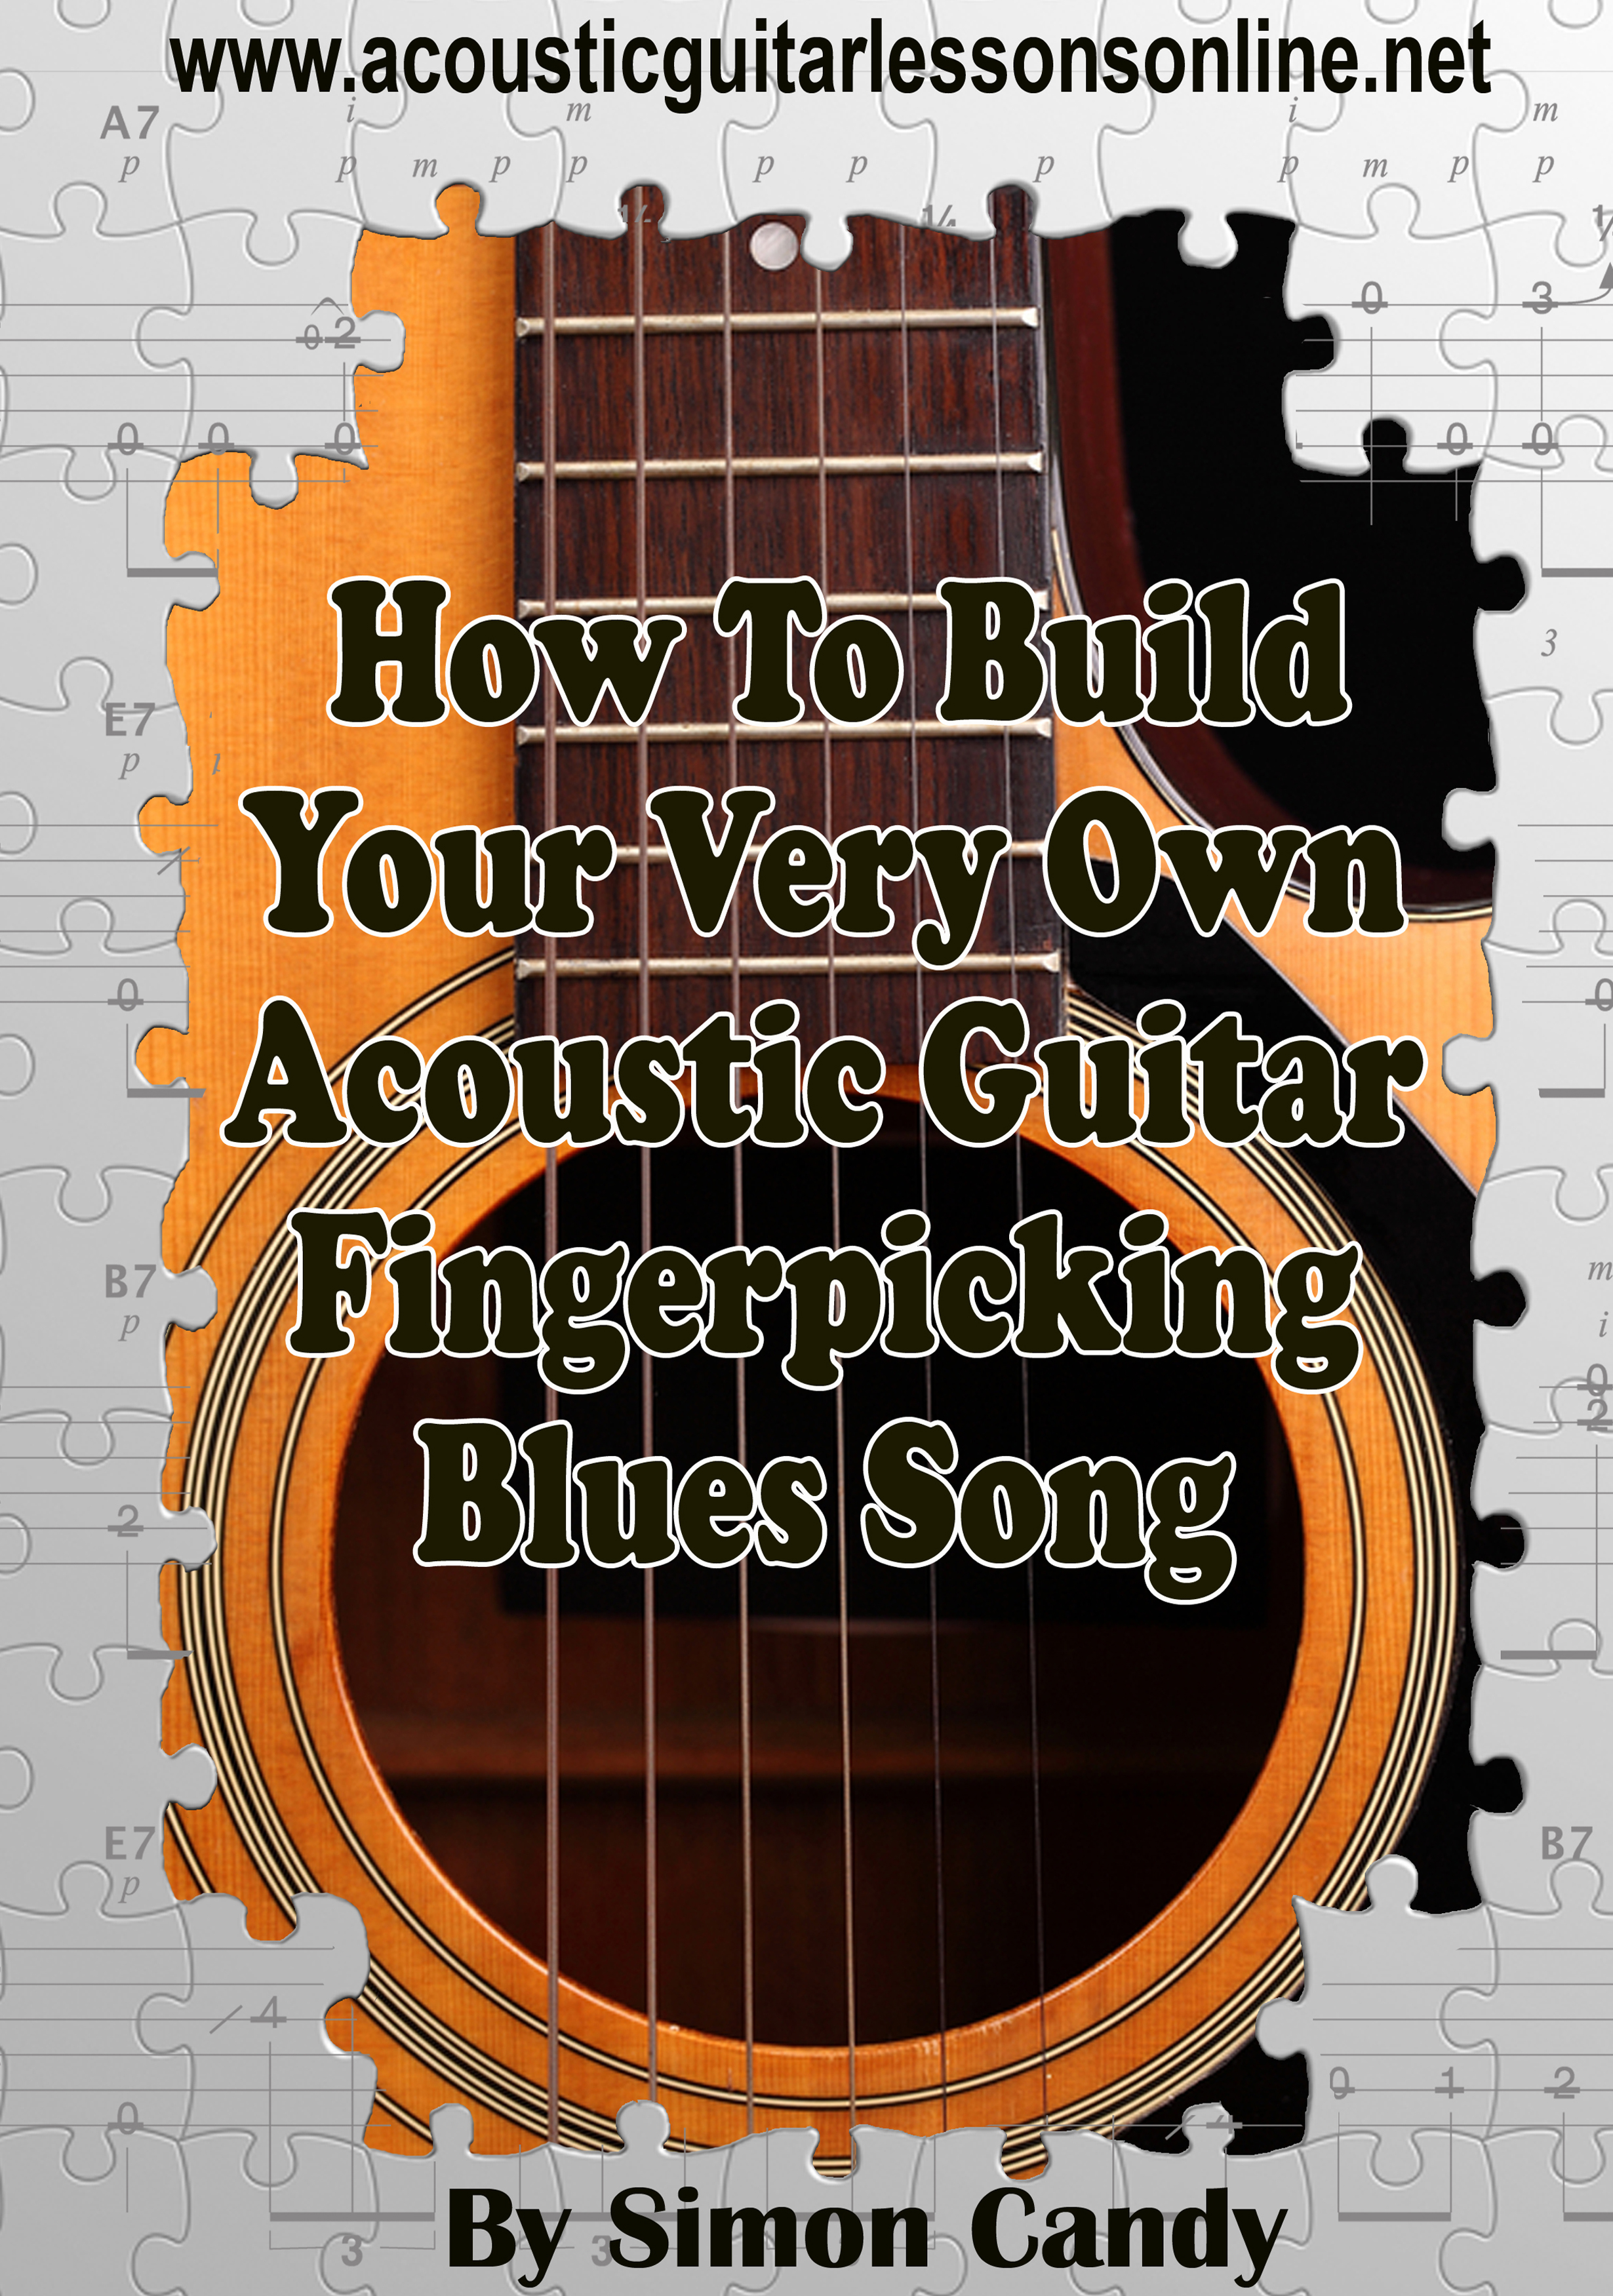 Acoustic-Fingerpicking-Blues